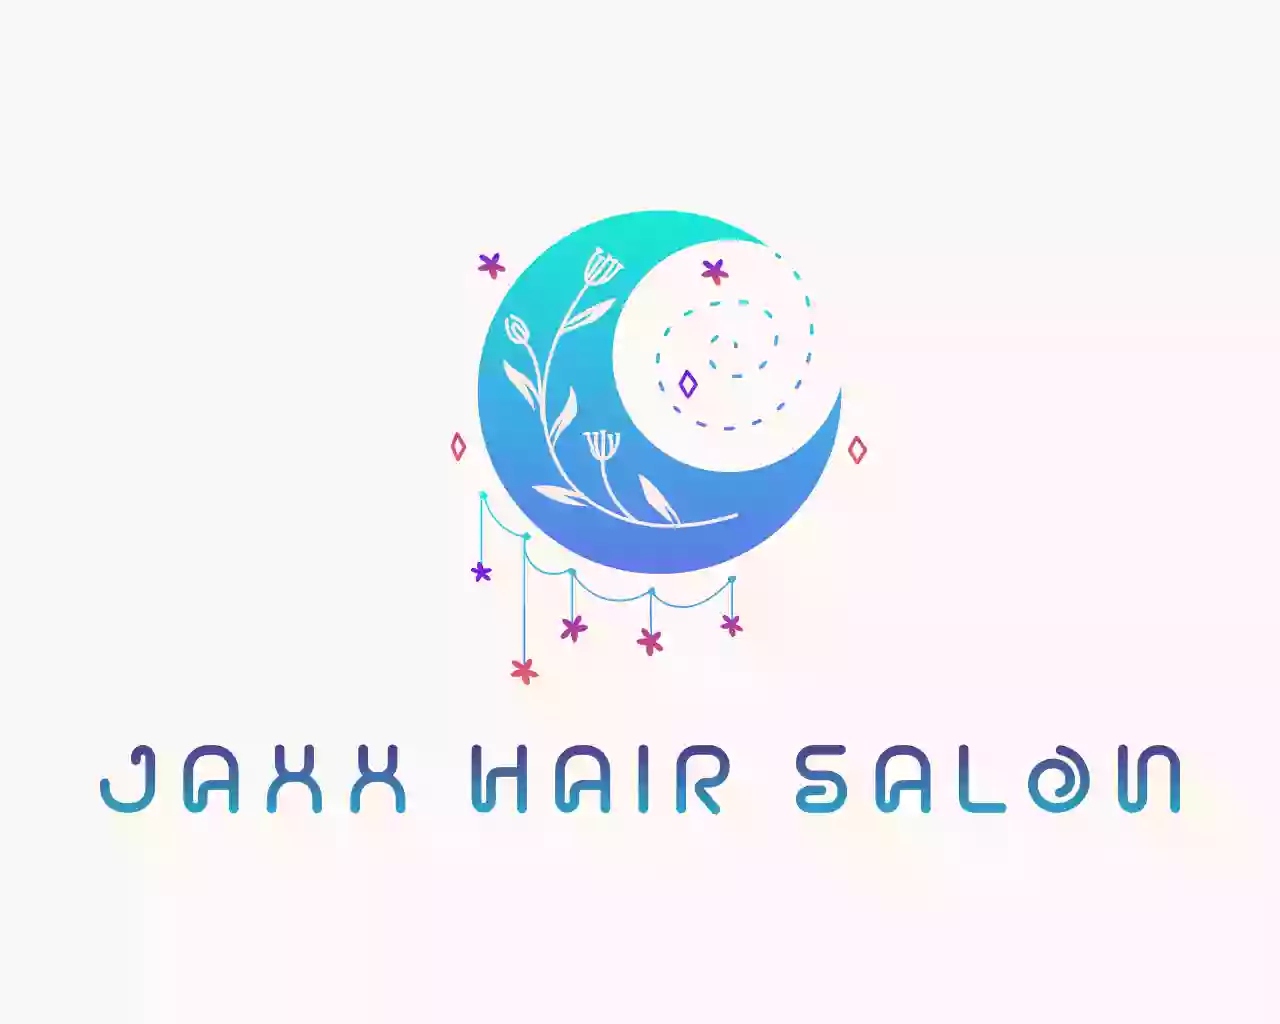 Jaxx Hair Salon